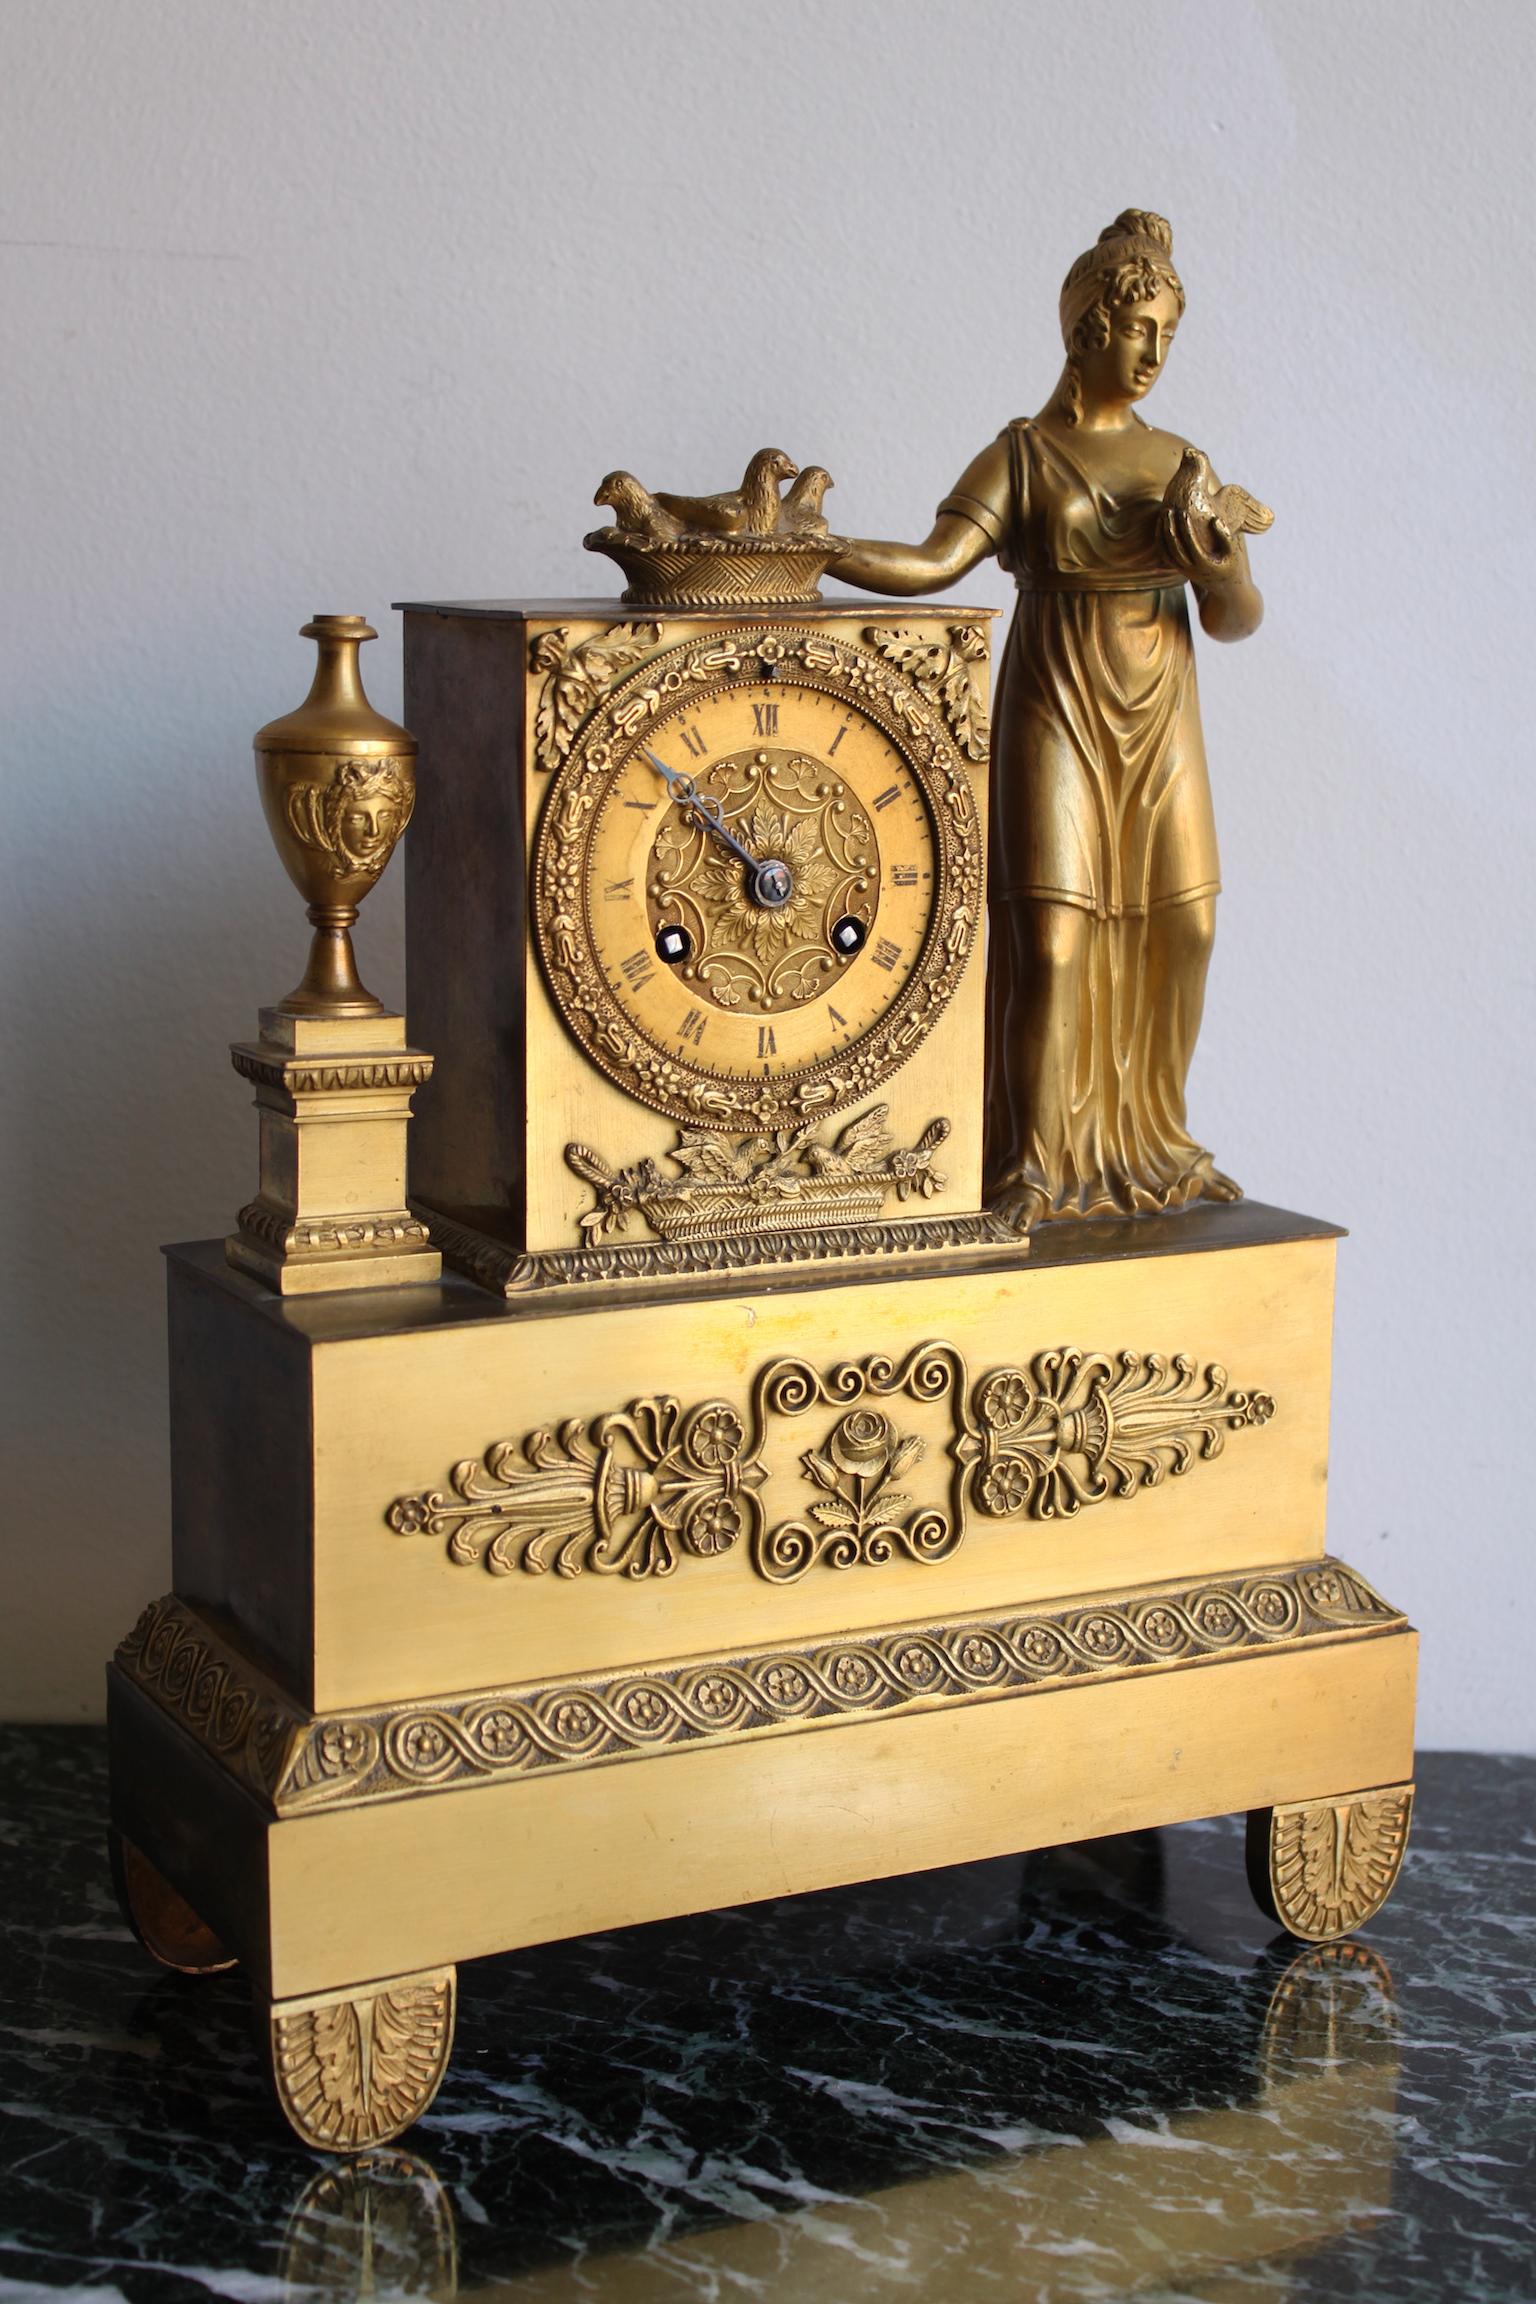 Gilded bronze clock depicting a vestal, Empire period.
19th century.
Dimensions: Width 24cm, height 34cm, depth 9cm.